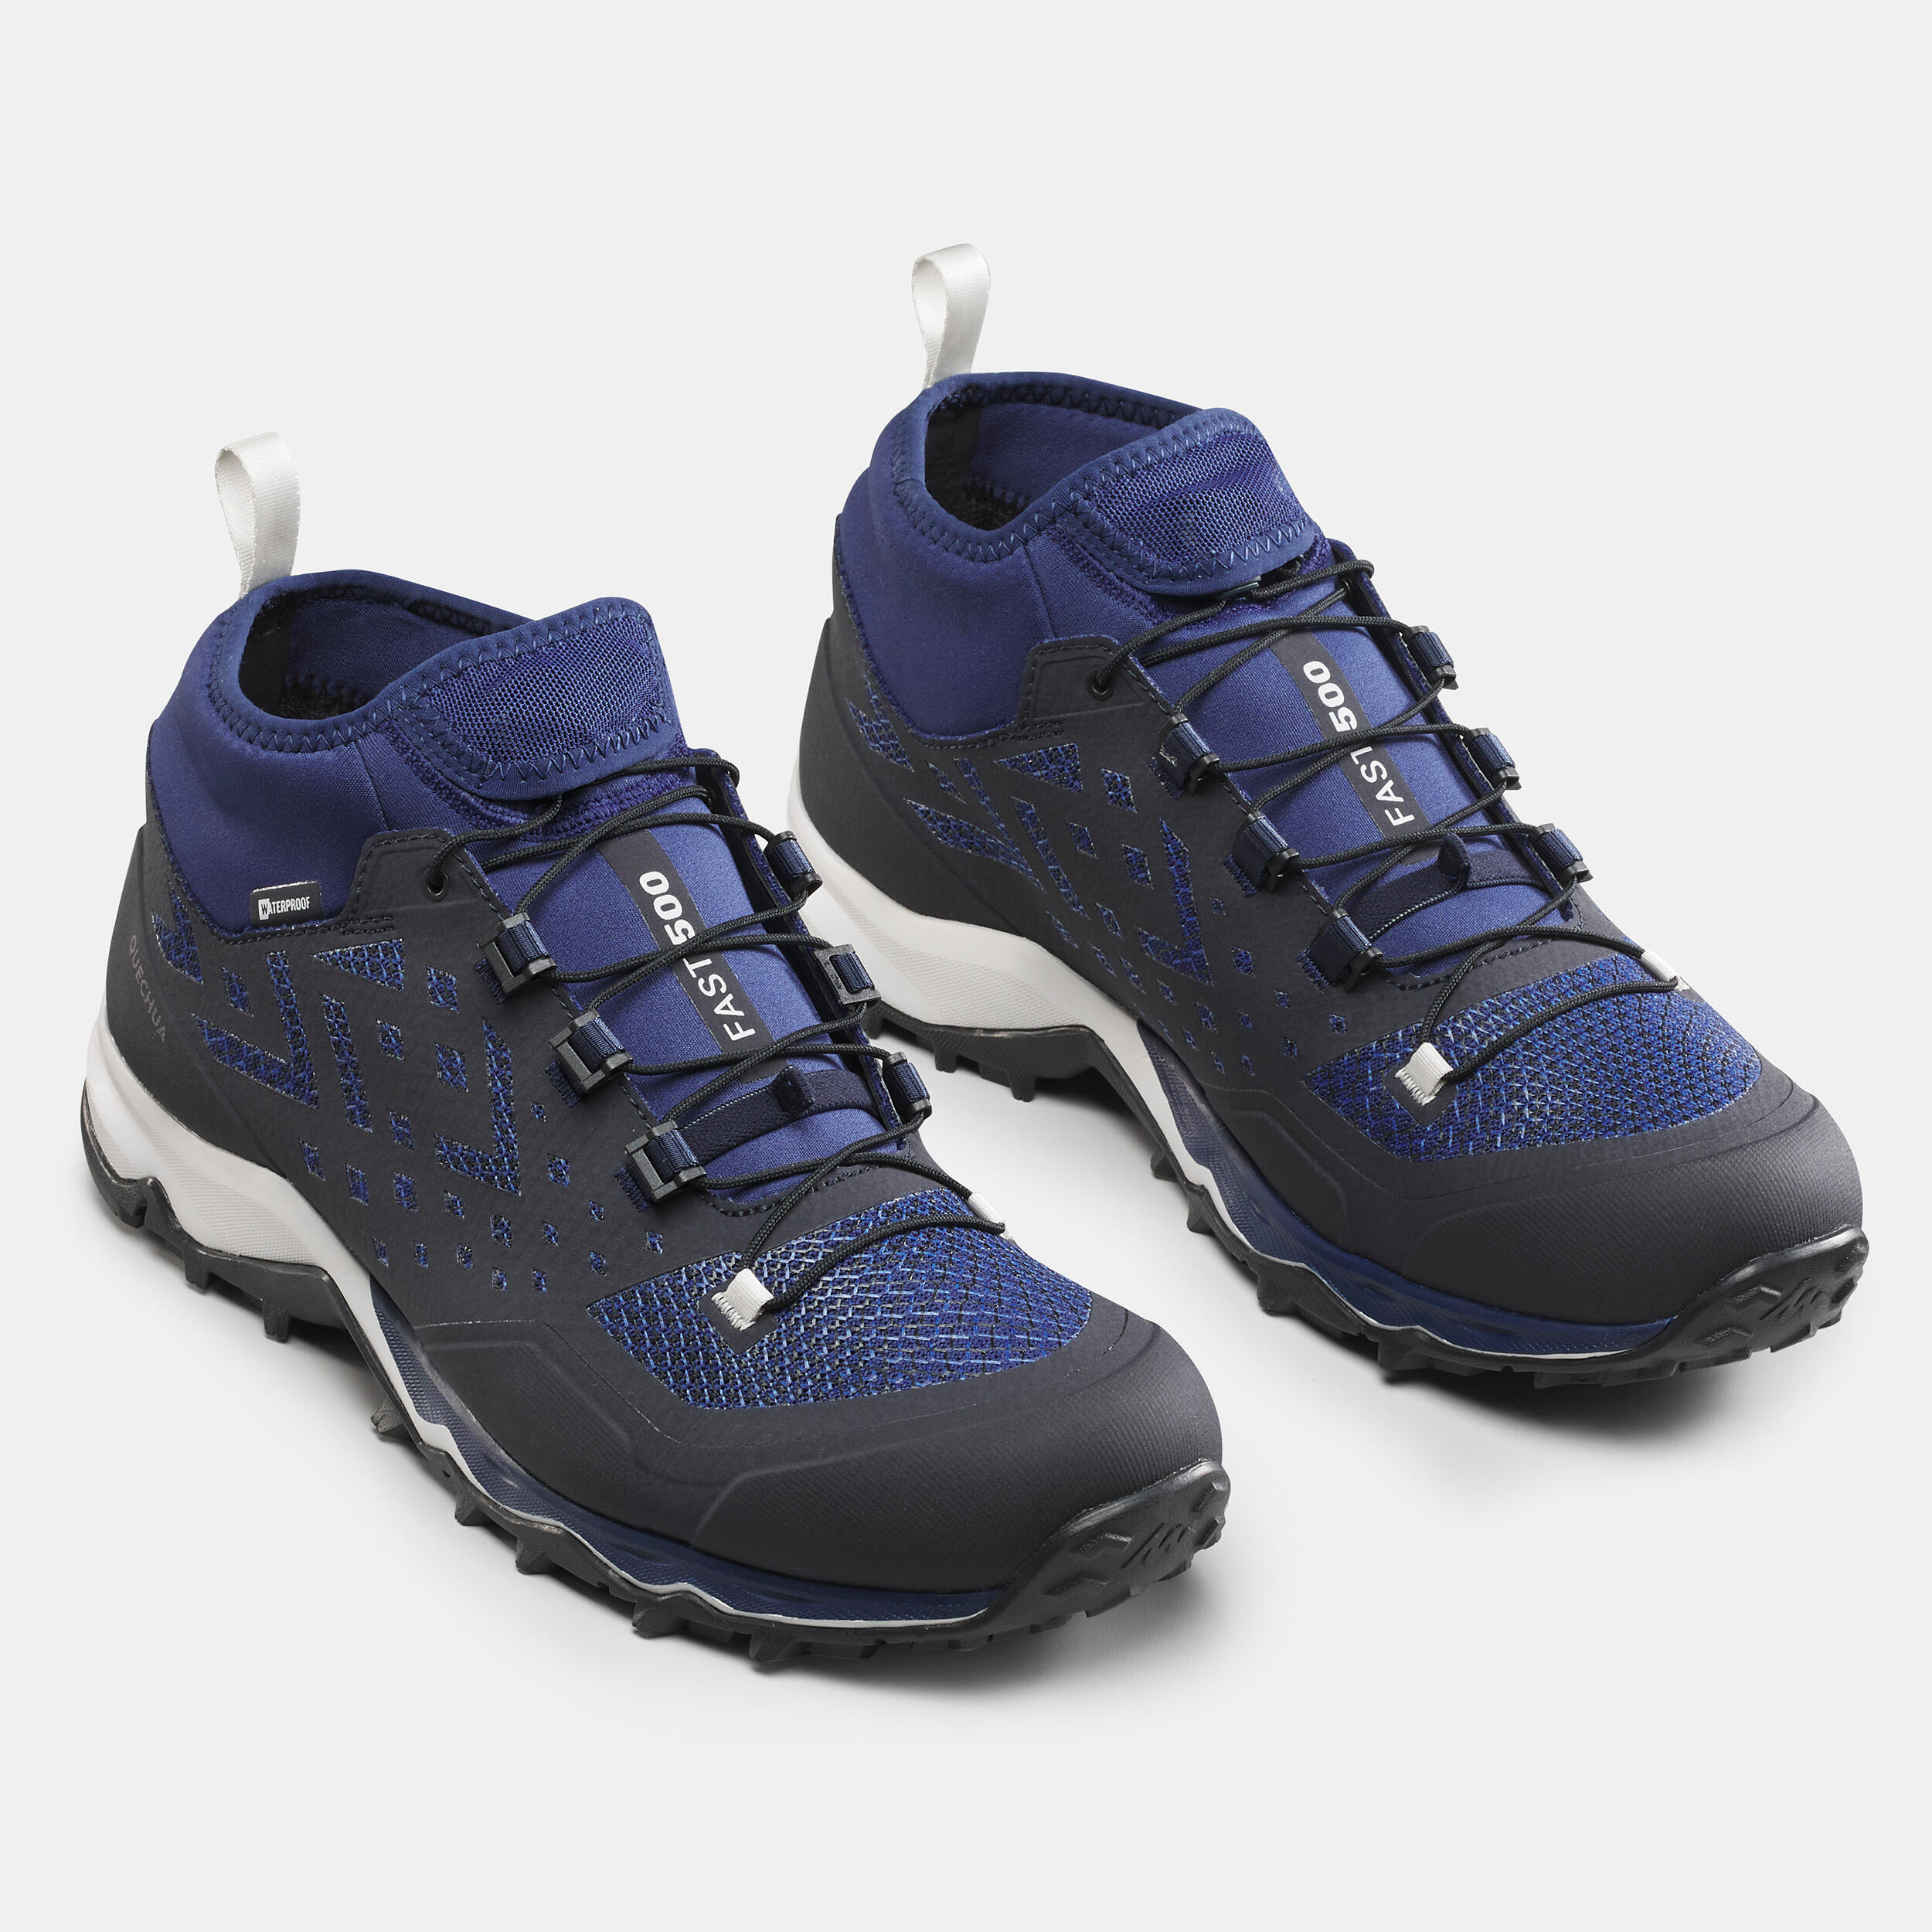 Men's Fast Hiking Ultra Lightweight Waterproof Boots - FH500 6/6